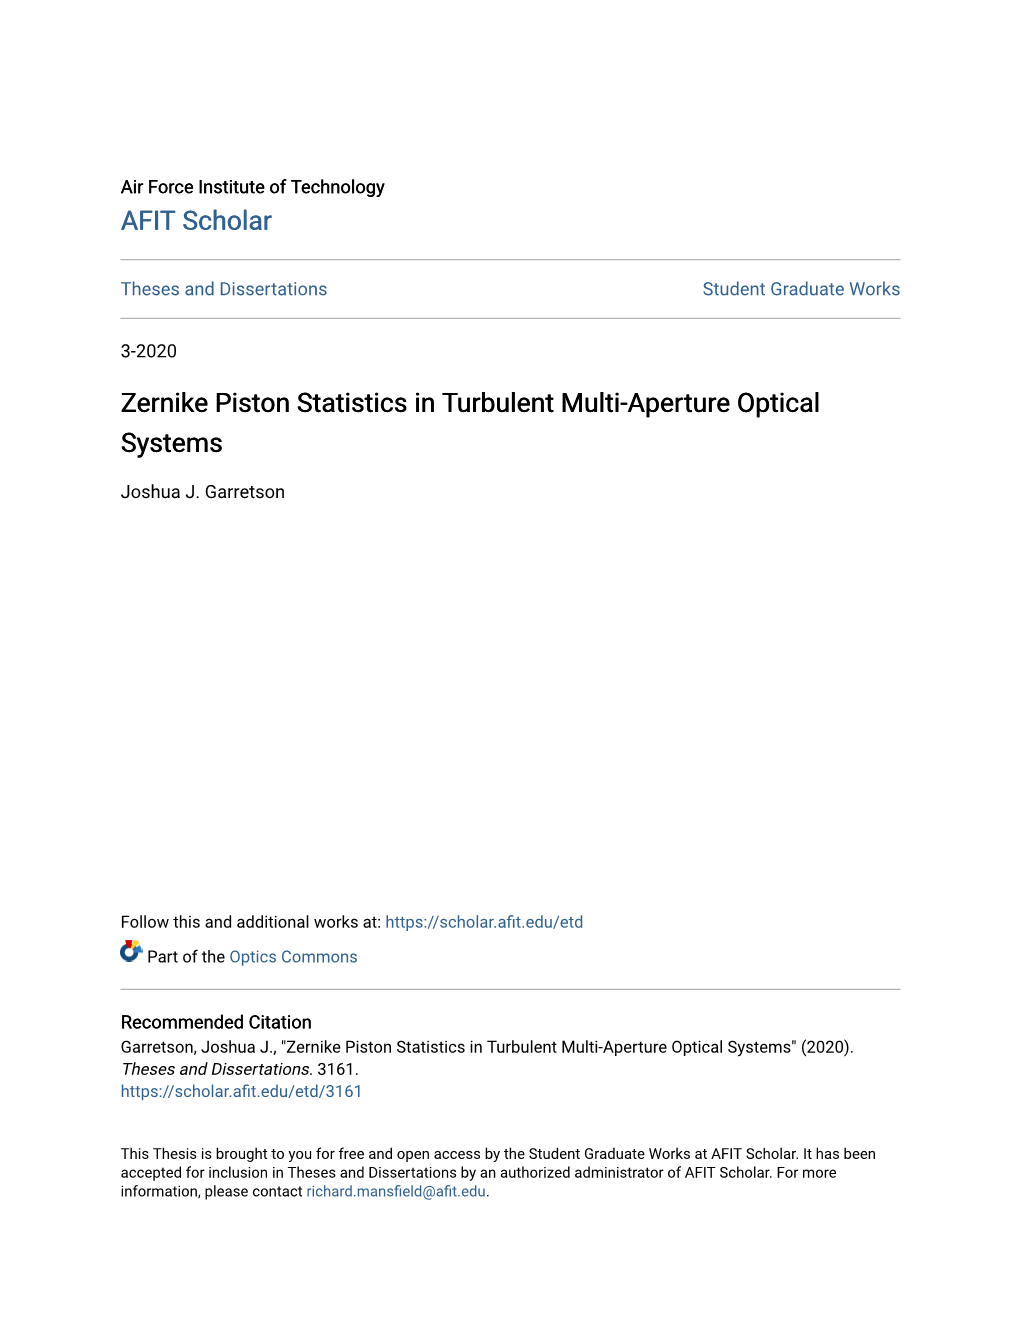 Zernike Piston Statistics in Turbulent Multi-Aperture Optical Systems